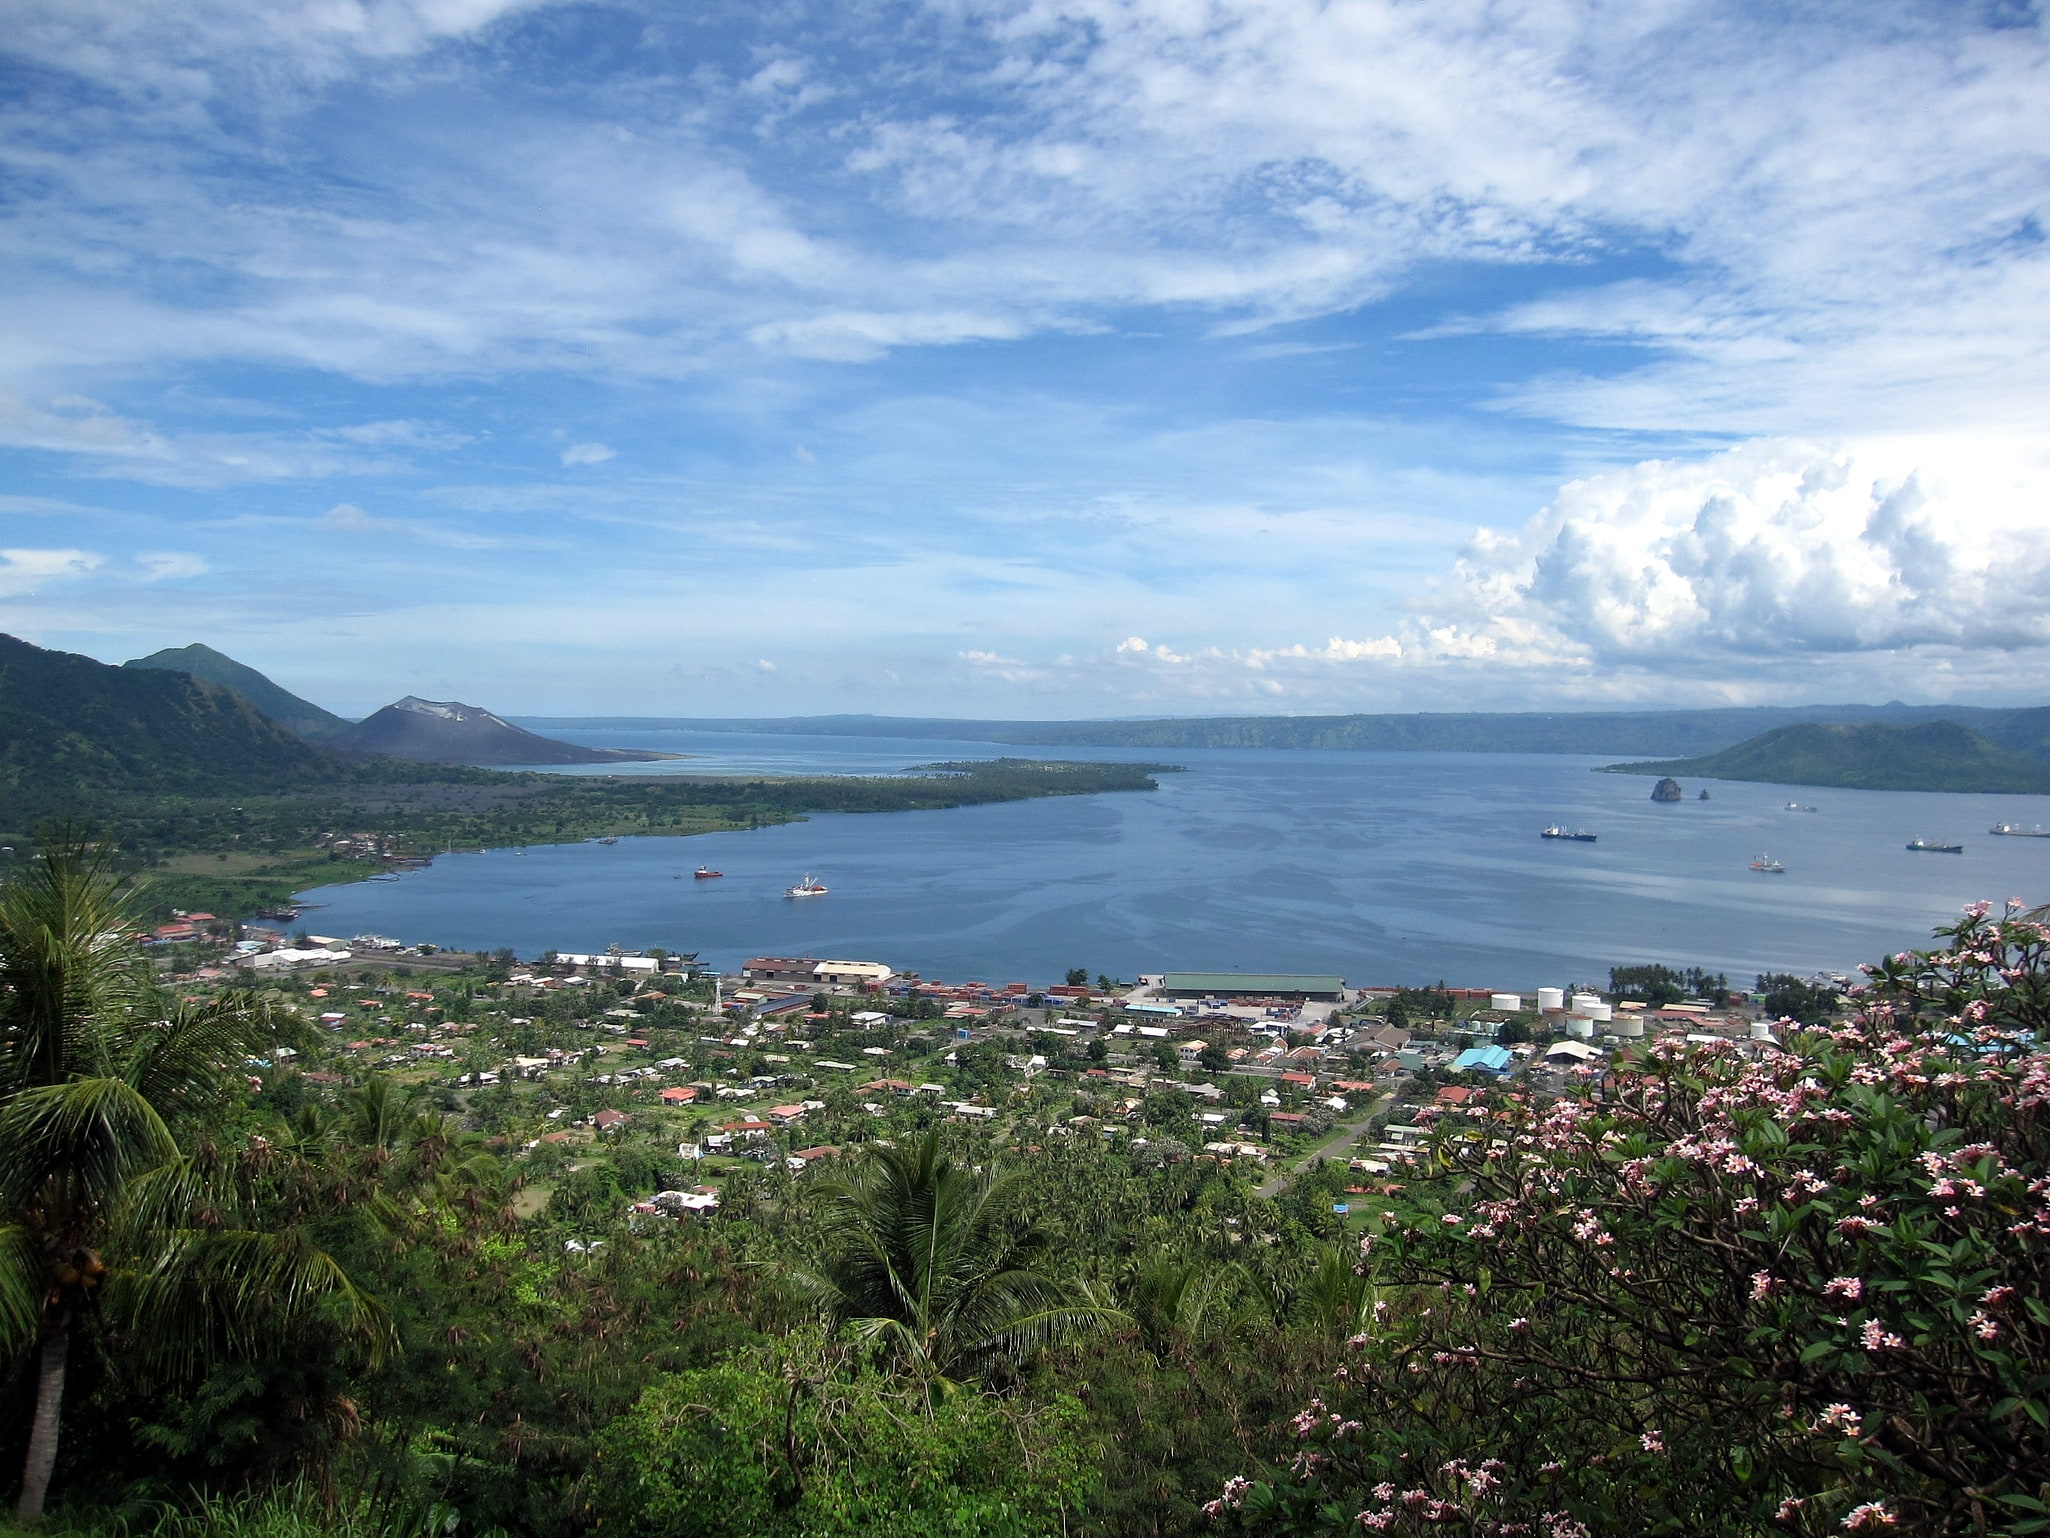 Rabaul, Papua New Guinea